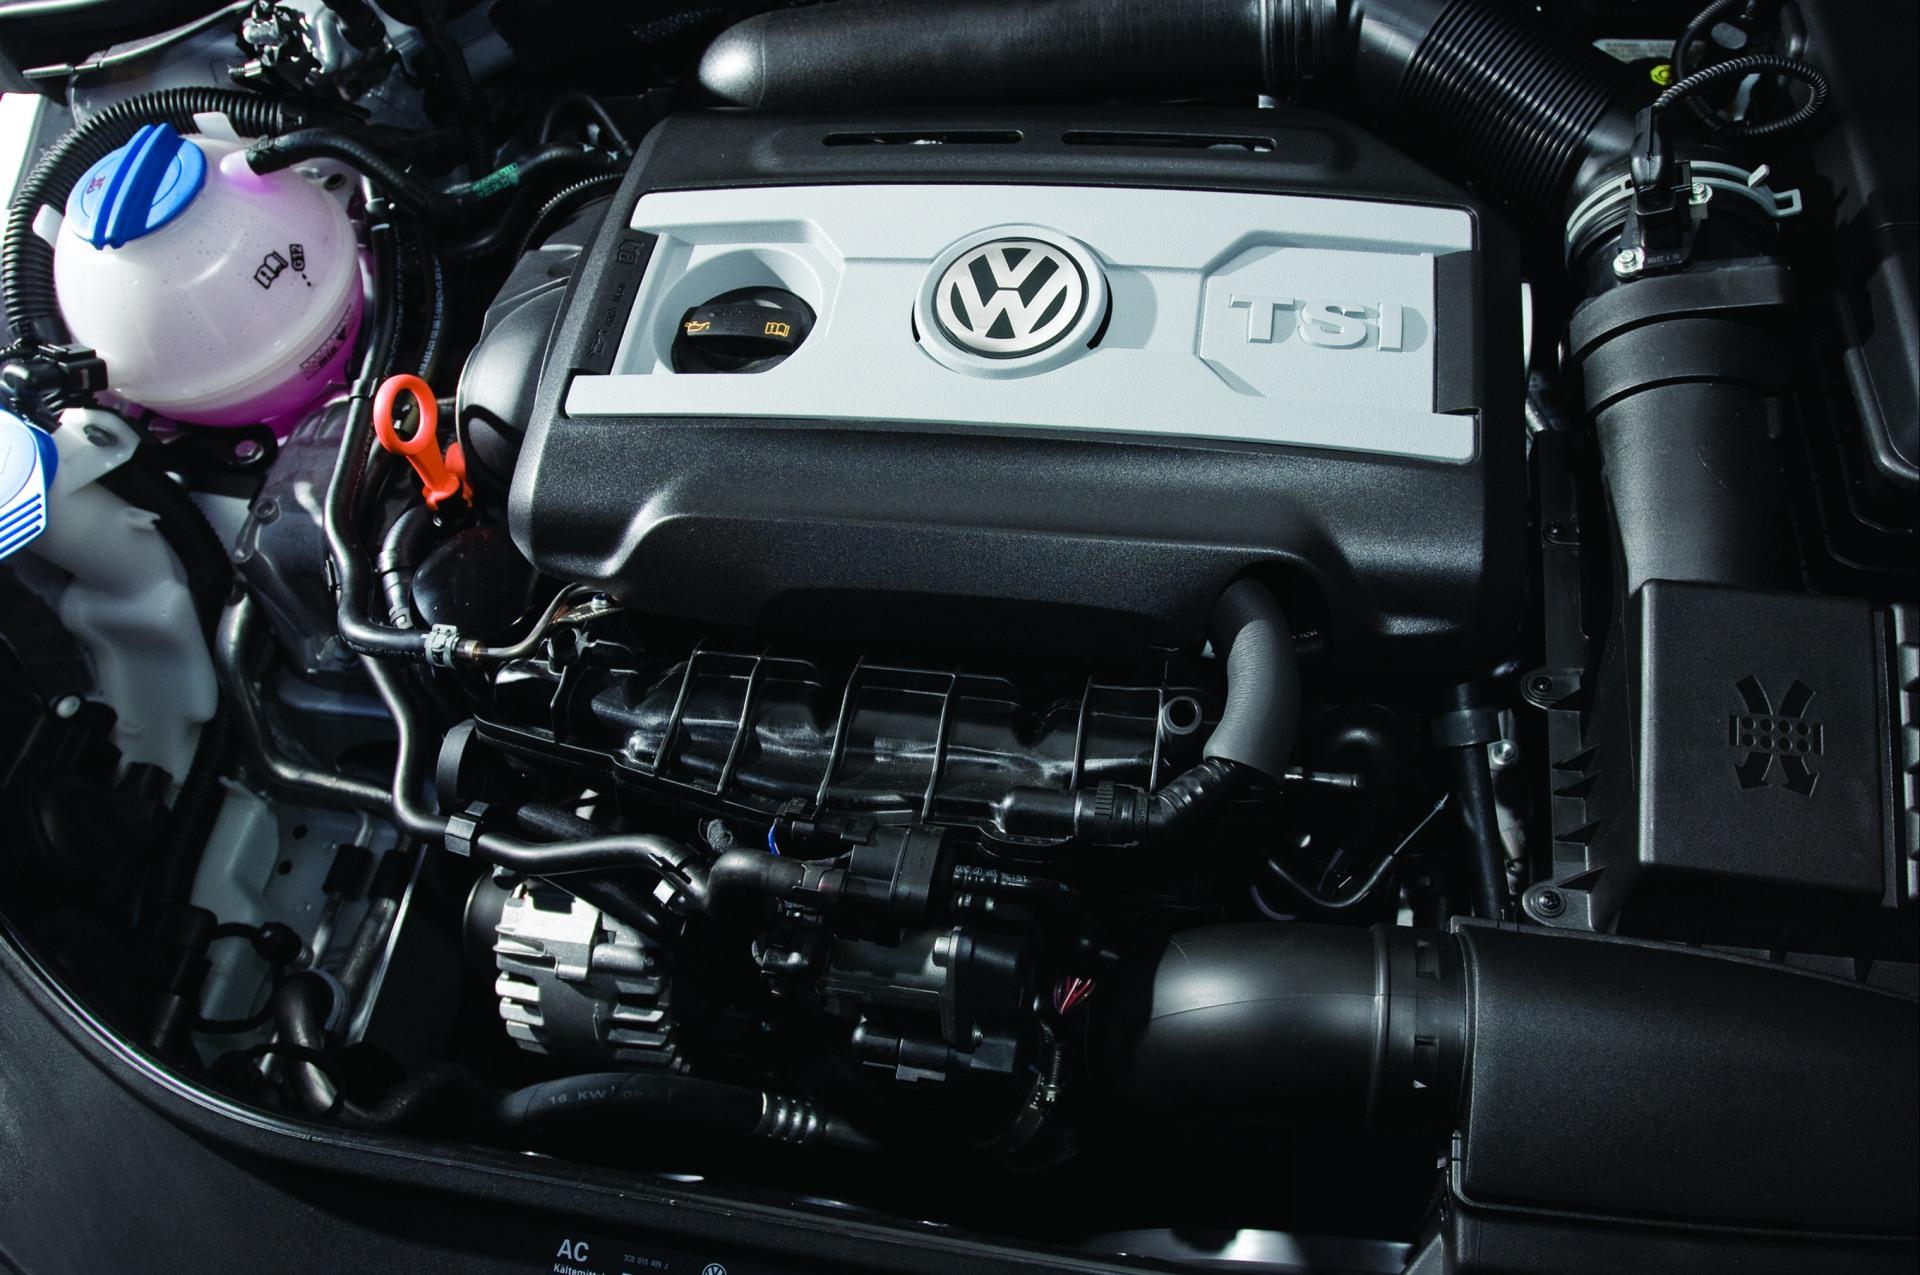 Tsi двигатель ремонт. Volkswagen Passat cc TSI мотор. Двигатель Volkswagen Passat СС 2.0 TDI. Фольксваген б 6 1 и 4 турбо. Фольксваген Пассат 1.4 турбо.